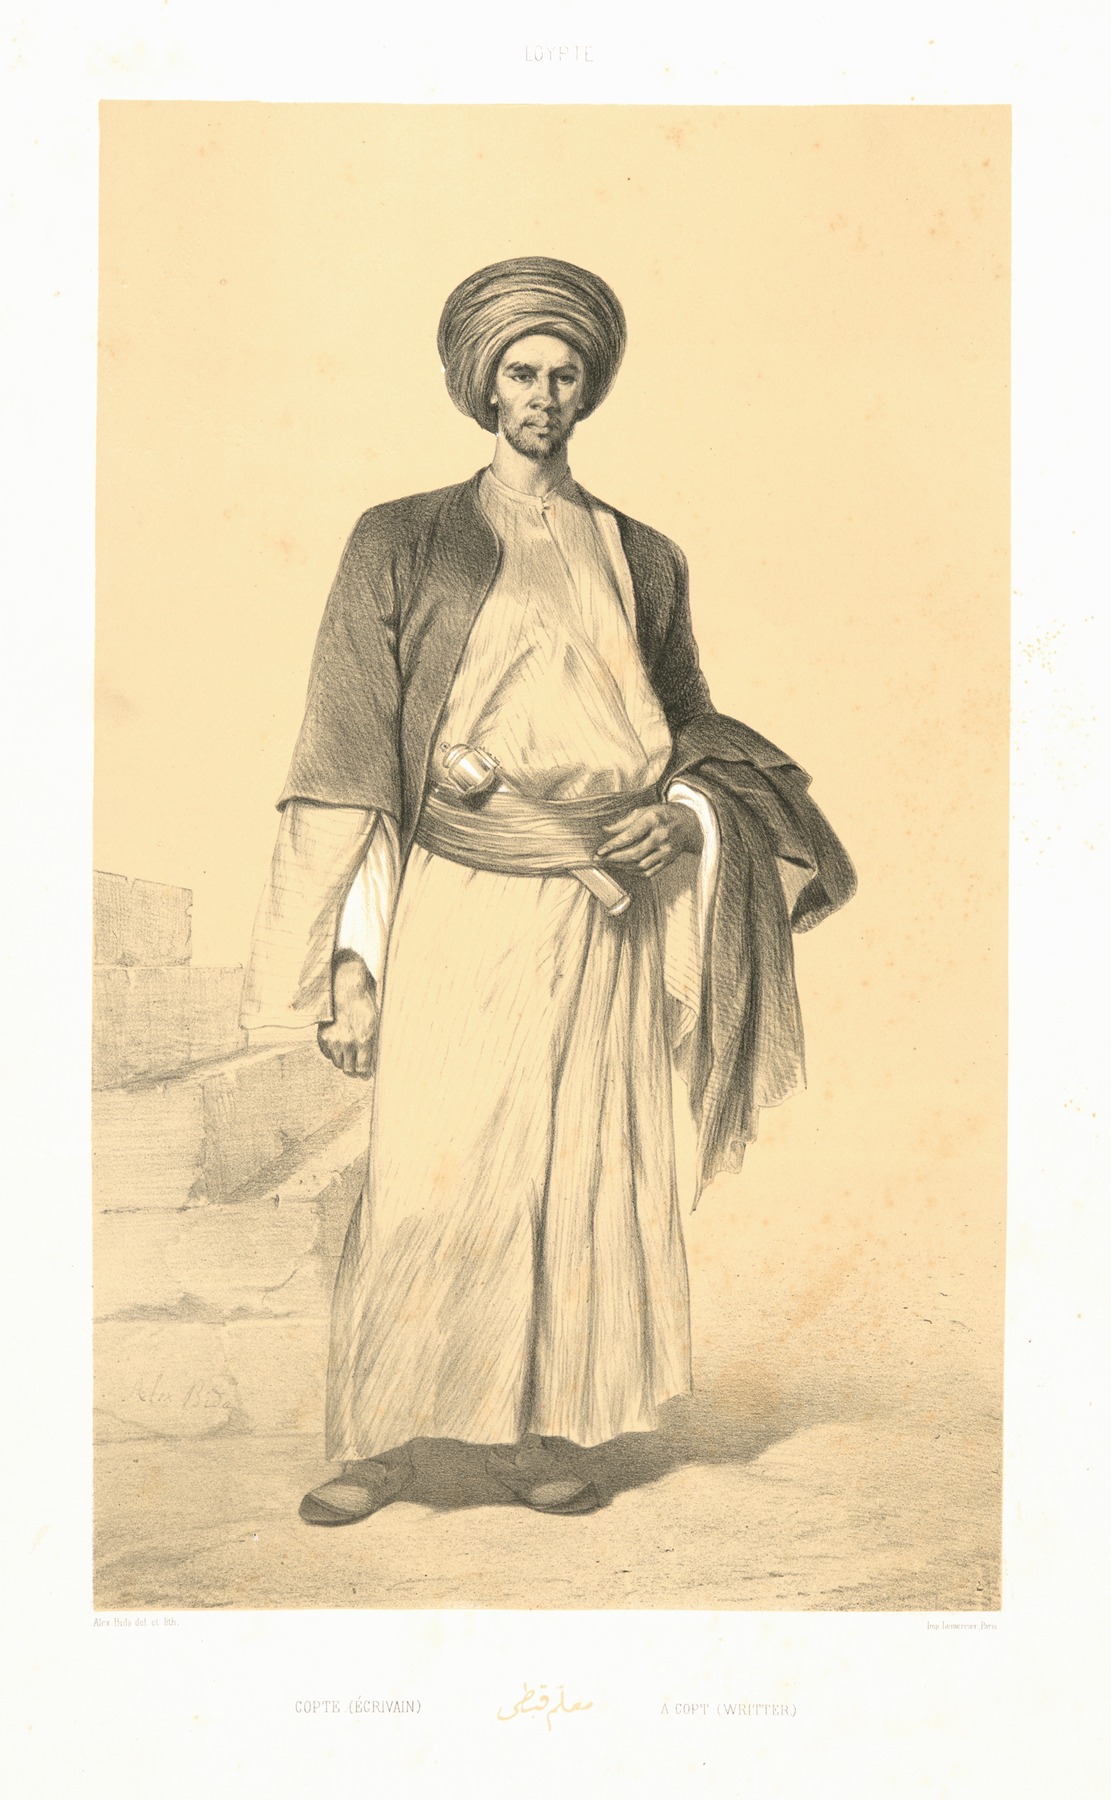 Alexandre Bida - Copte (Écrivain), A Copt (Writer)